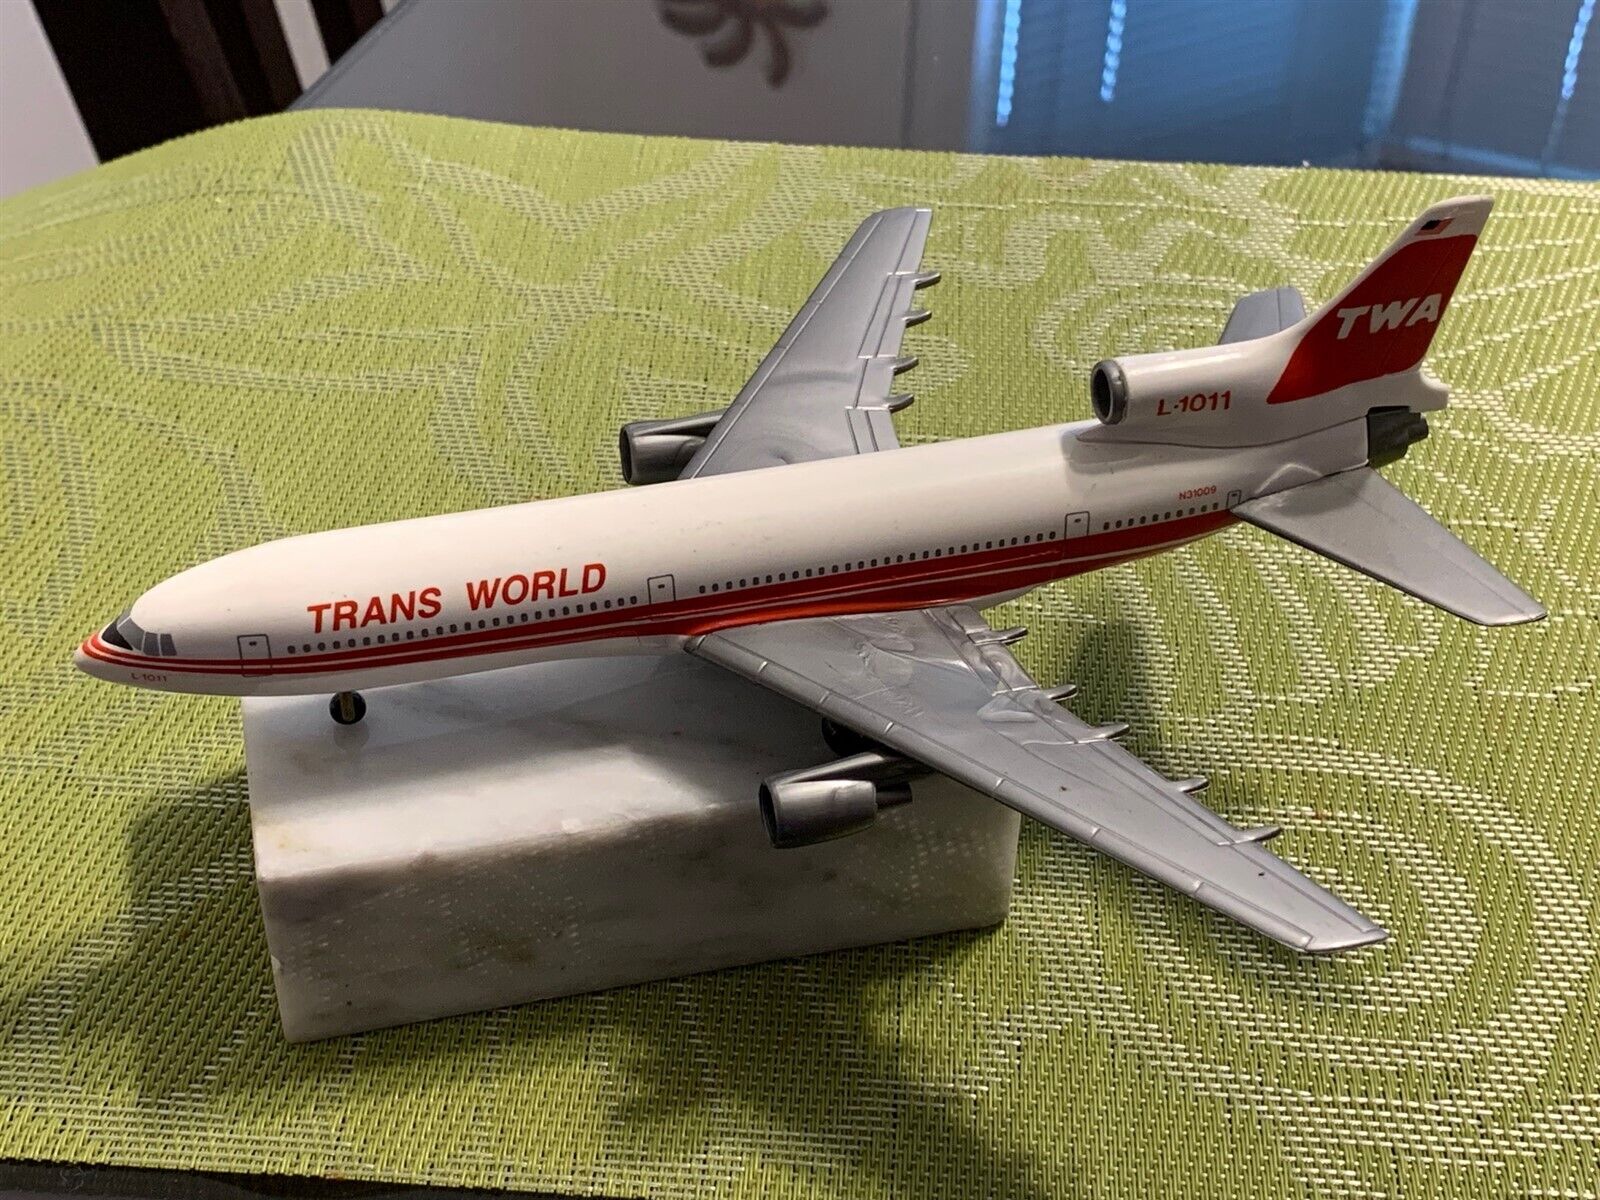 TWA TRANS WORLD AIRLINE LOCKHEED L-1011 DISPLAY AIRPLANE 8 1/2\